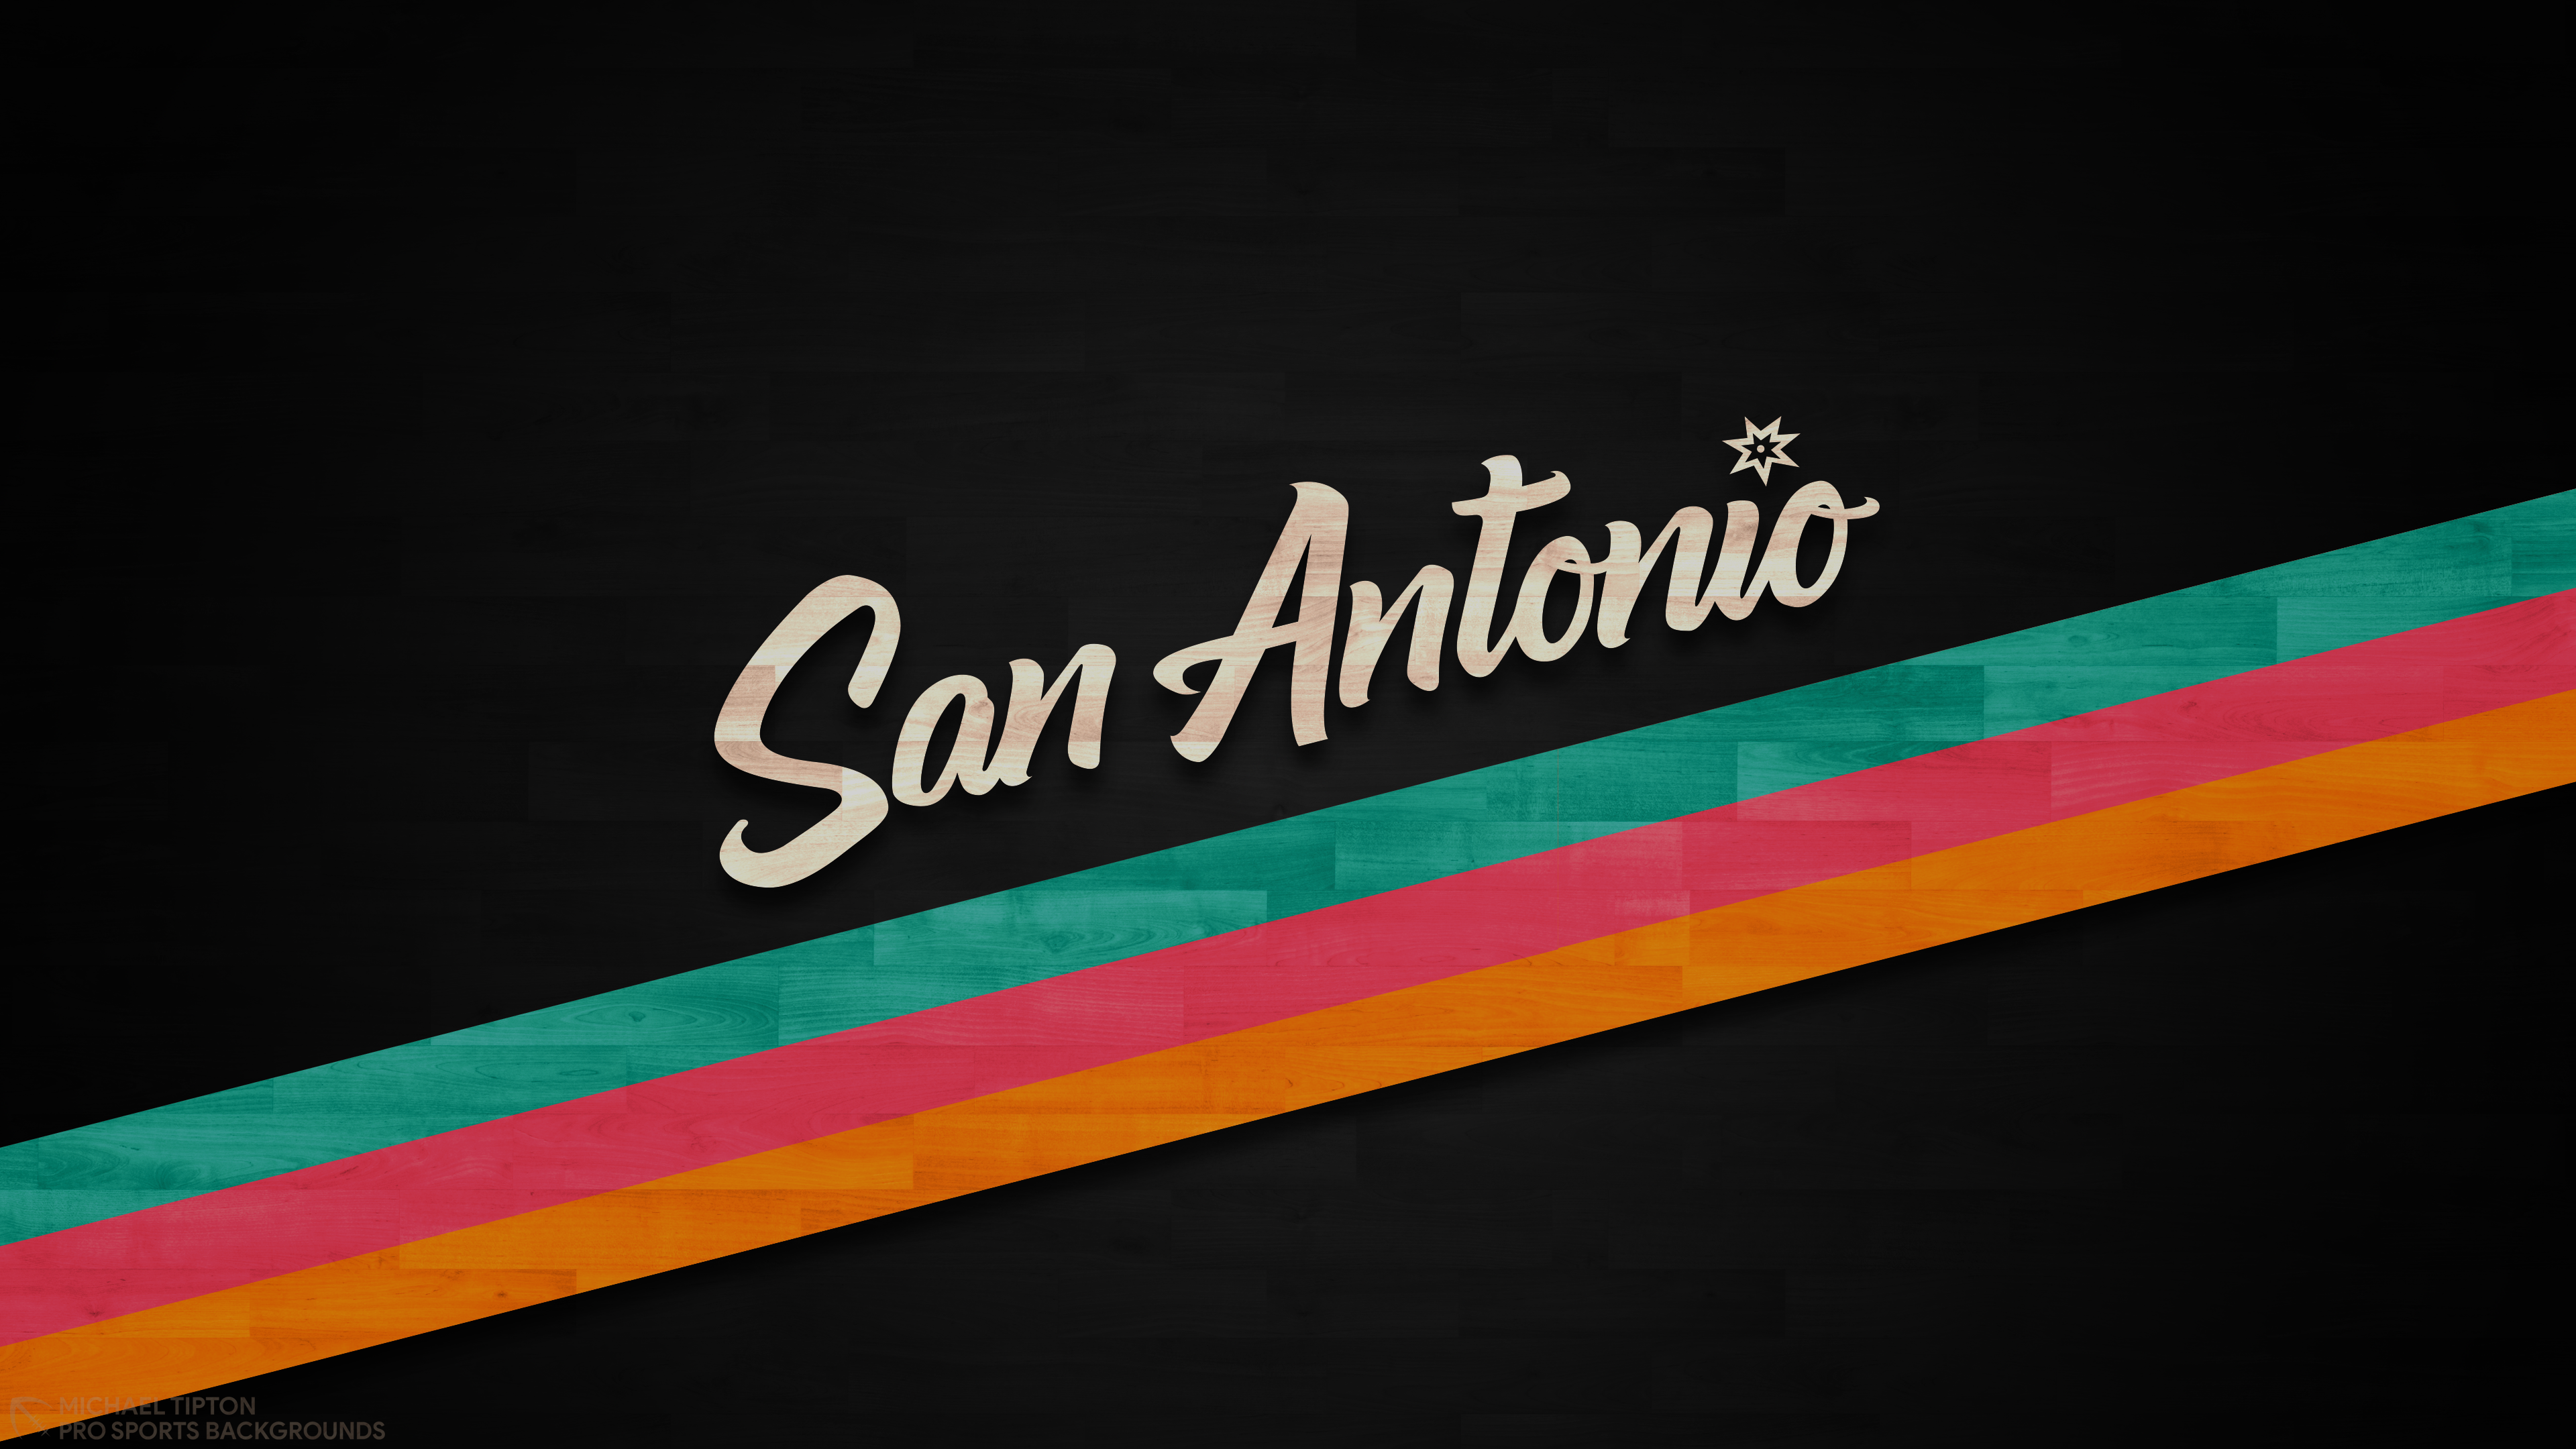 San Antonio Spurs Schedule Wallpaper